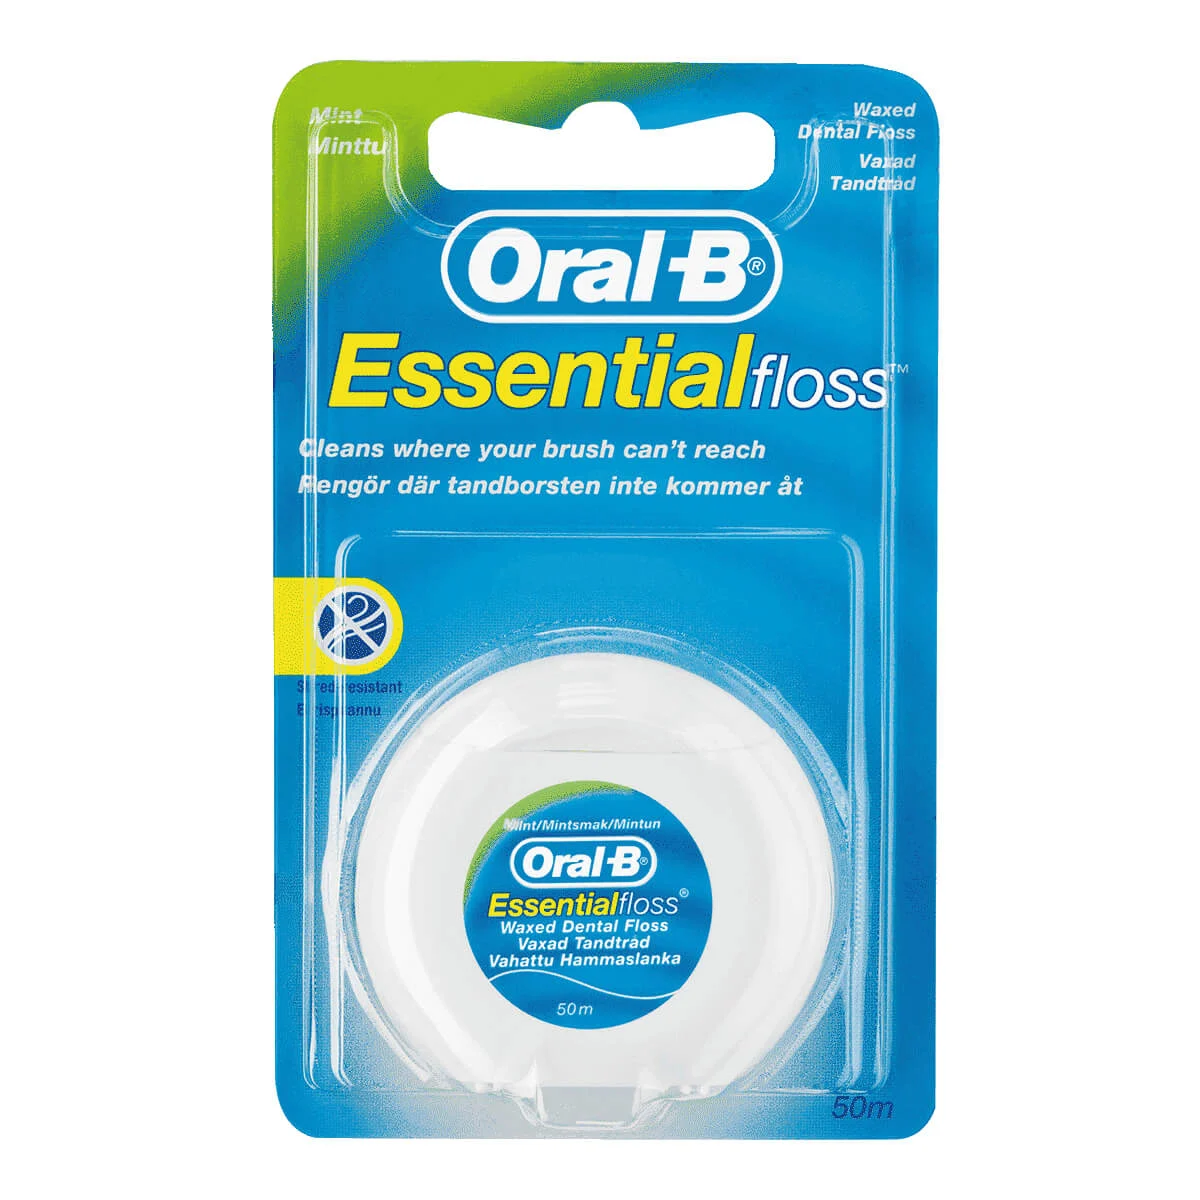 Oral-B Essential dental floss waxed, mint 